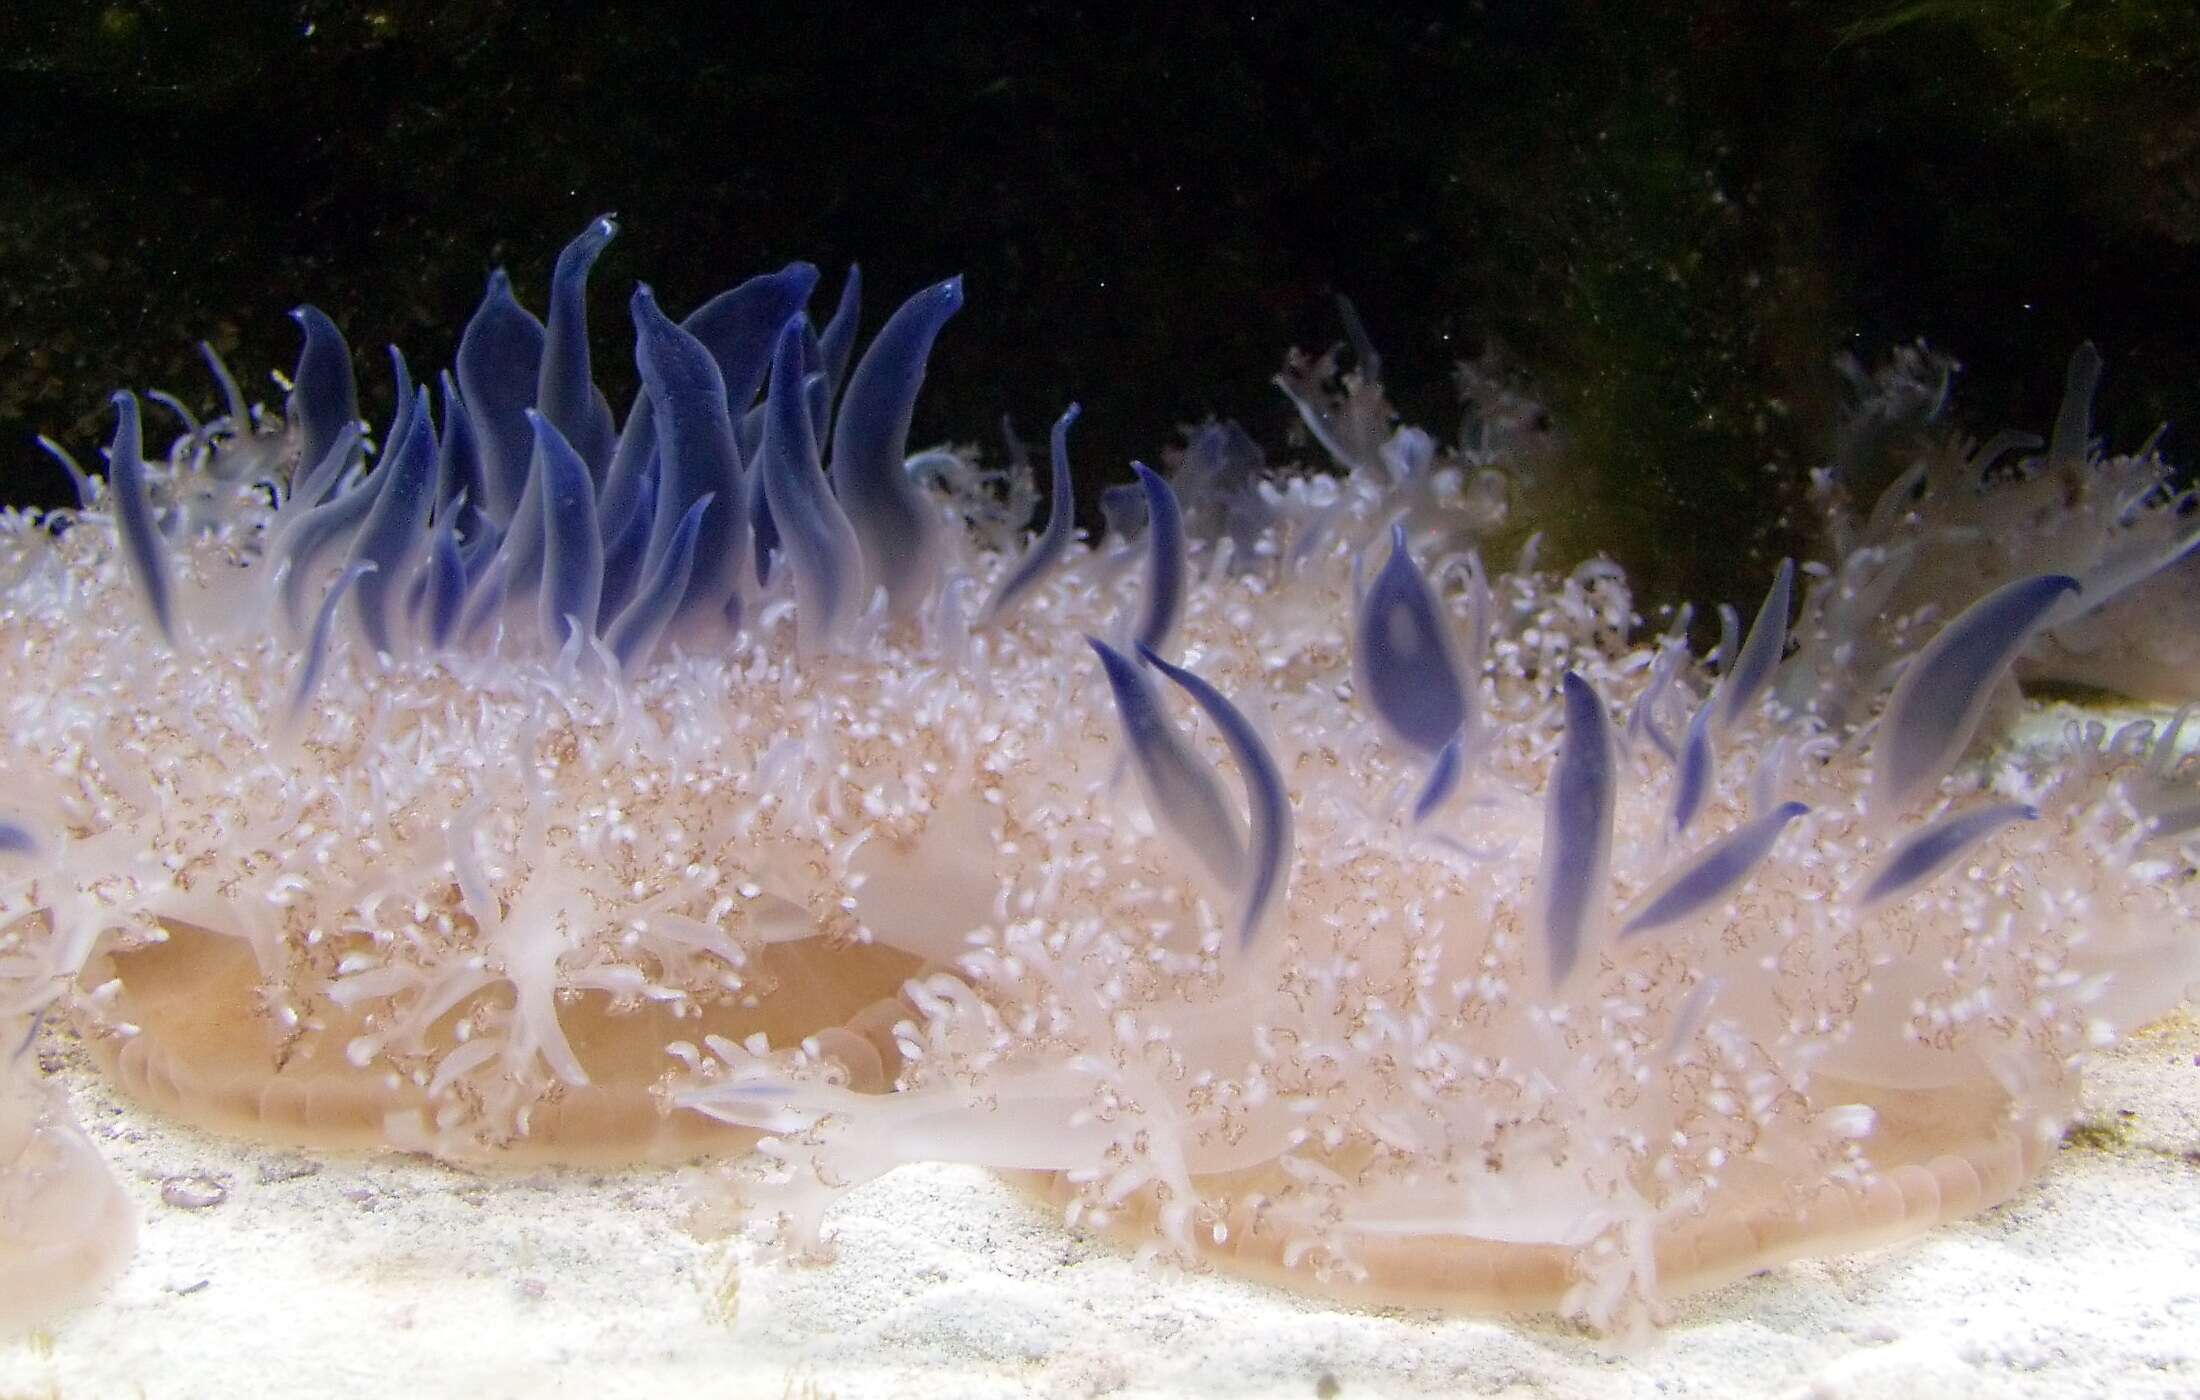 Image of Upside-down jellyfish